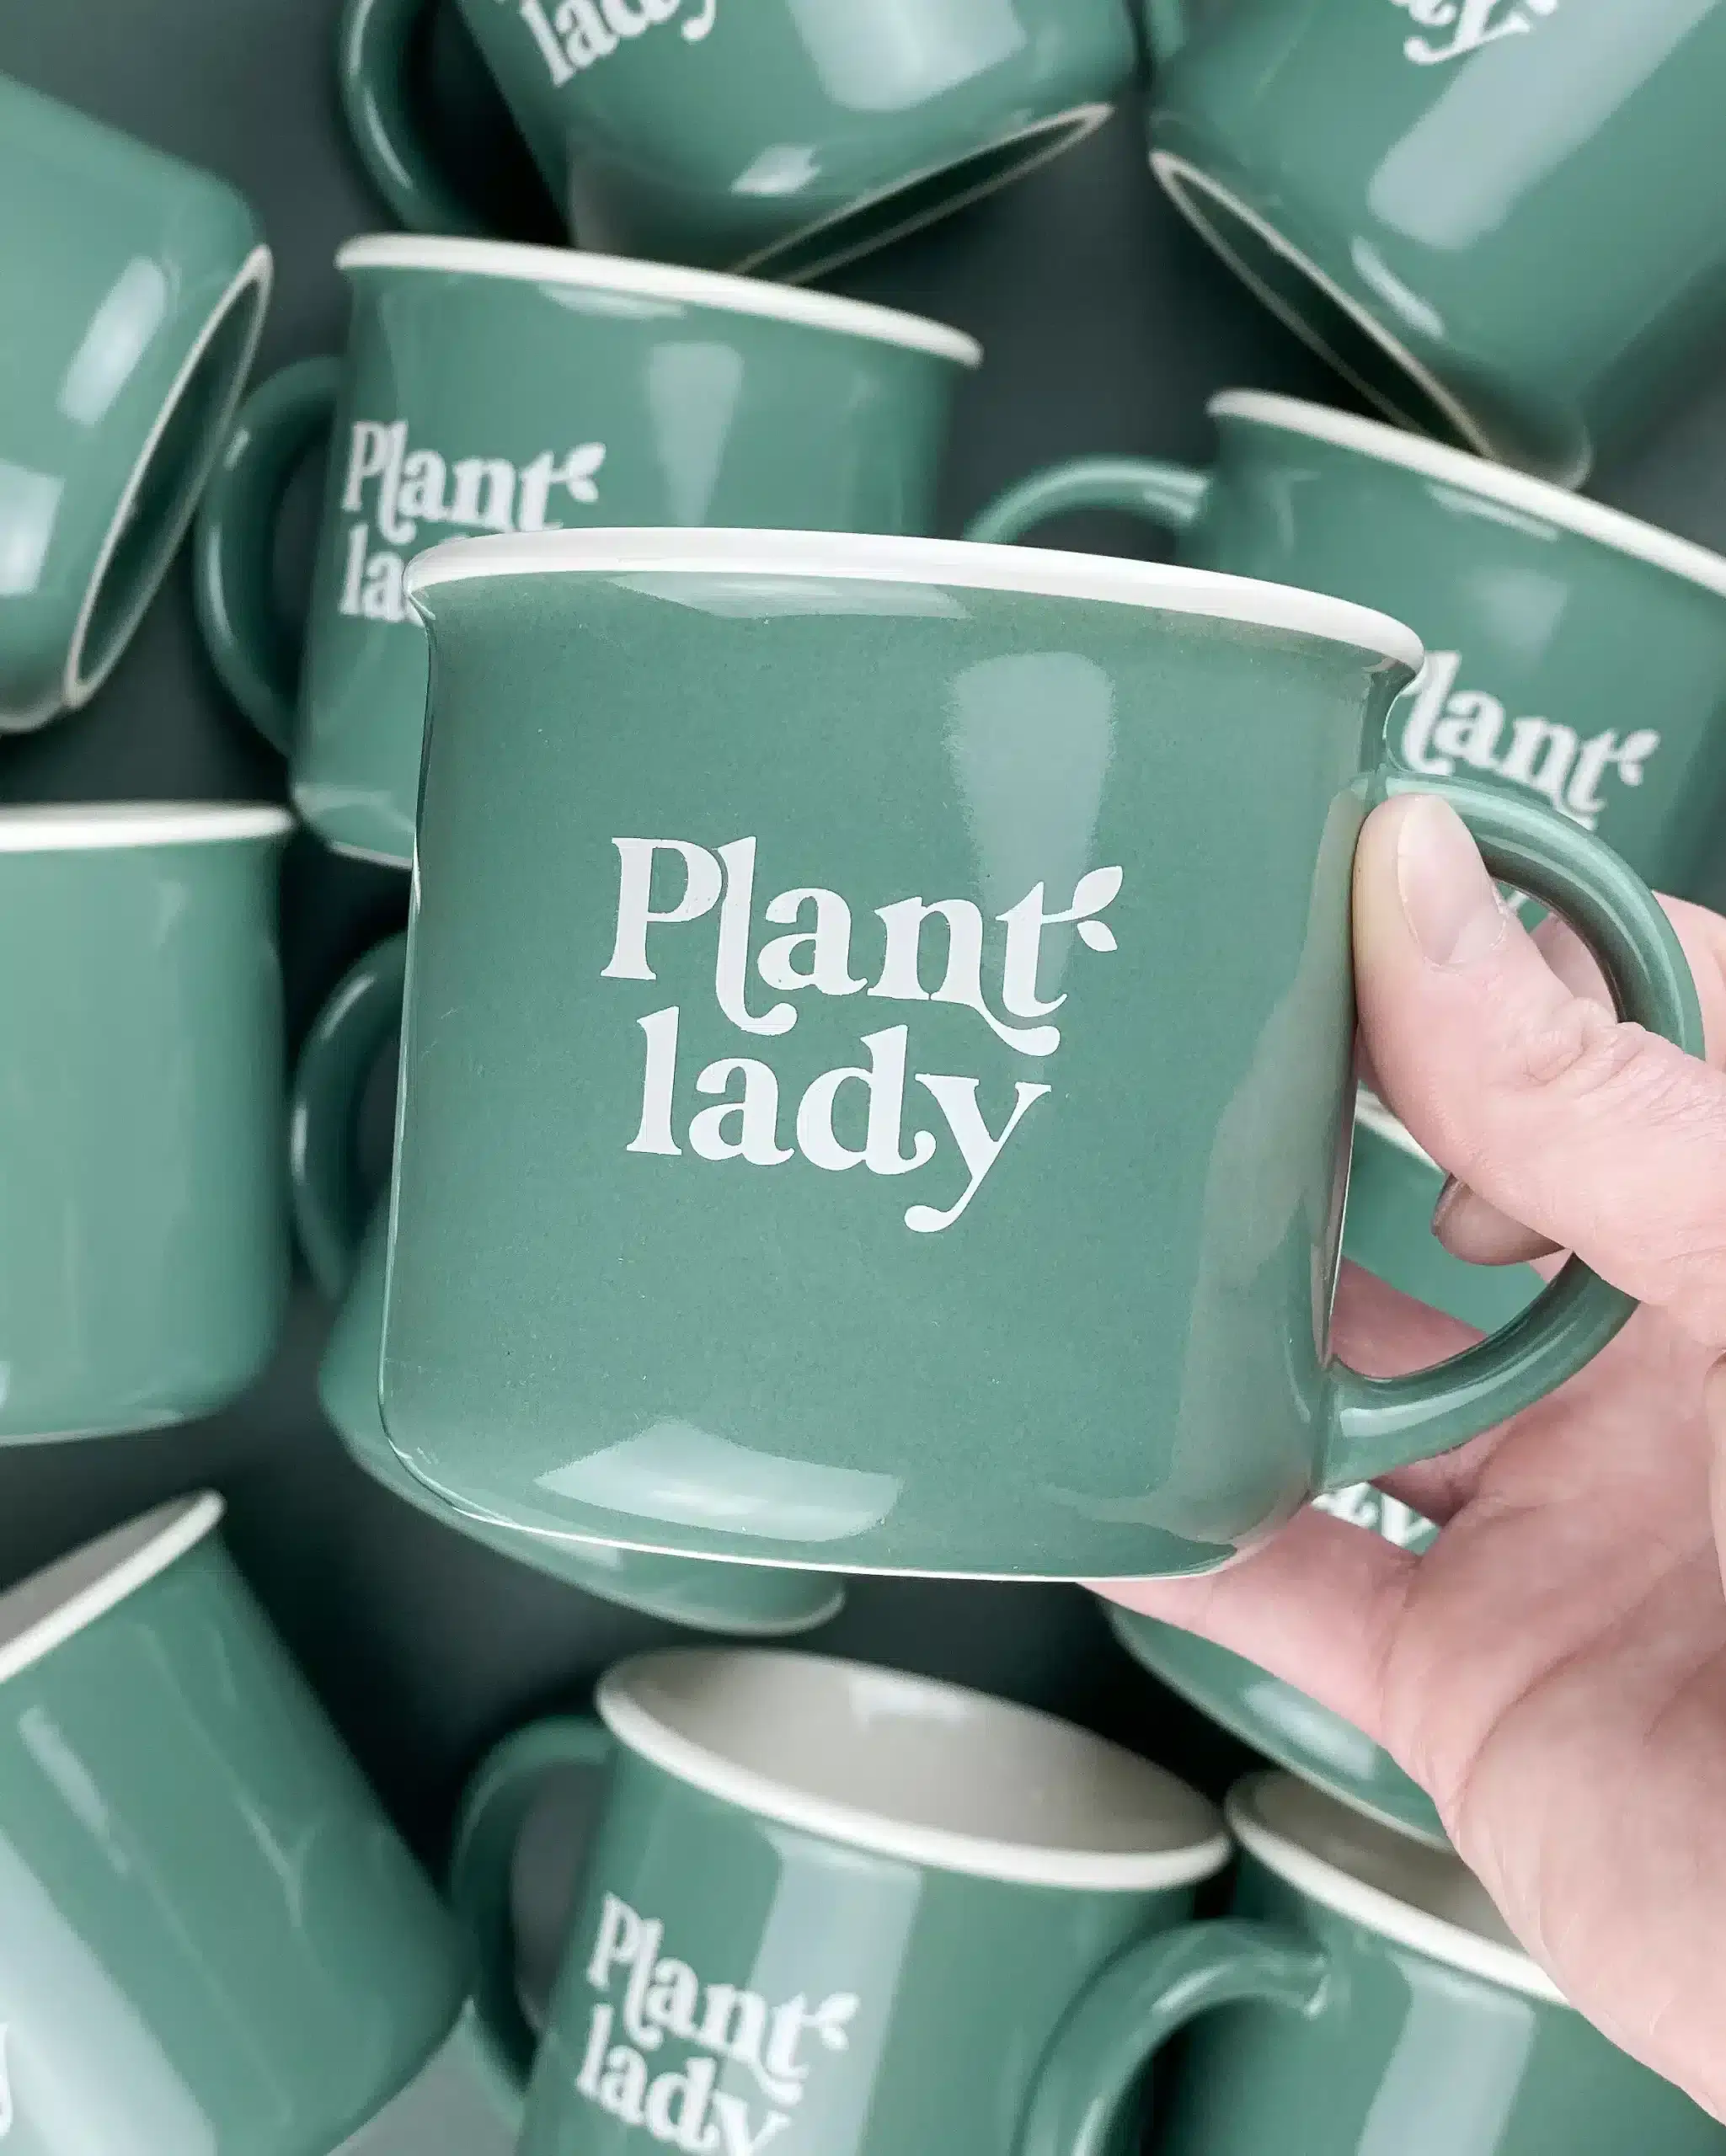 Mugg 'Plant lady'